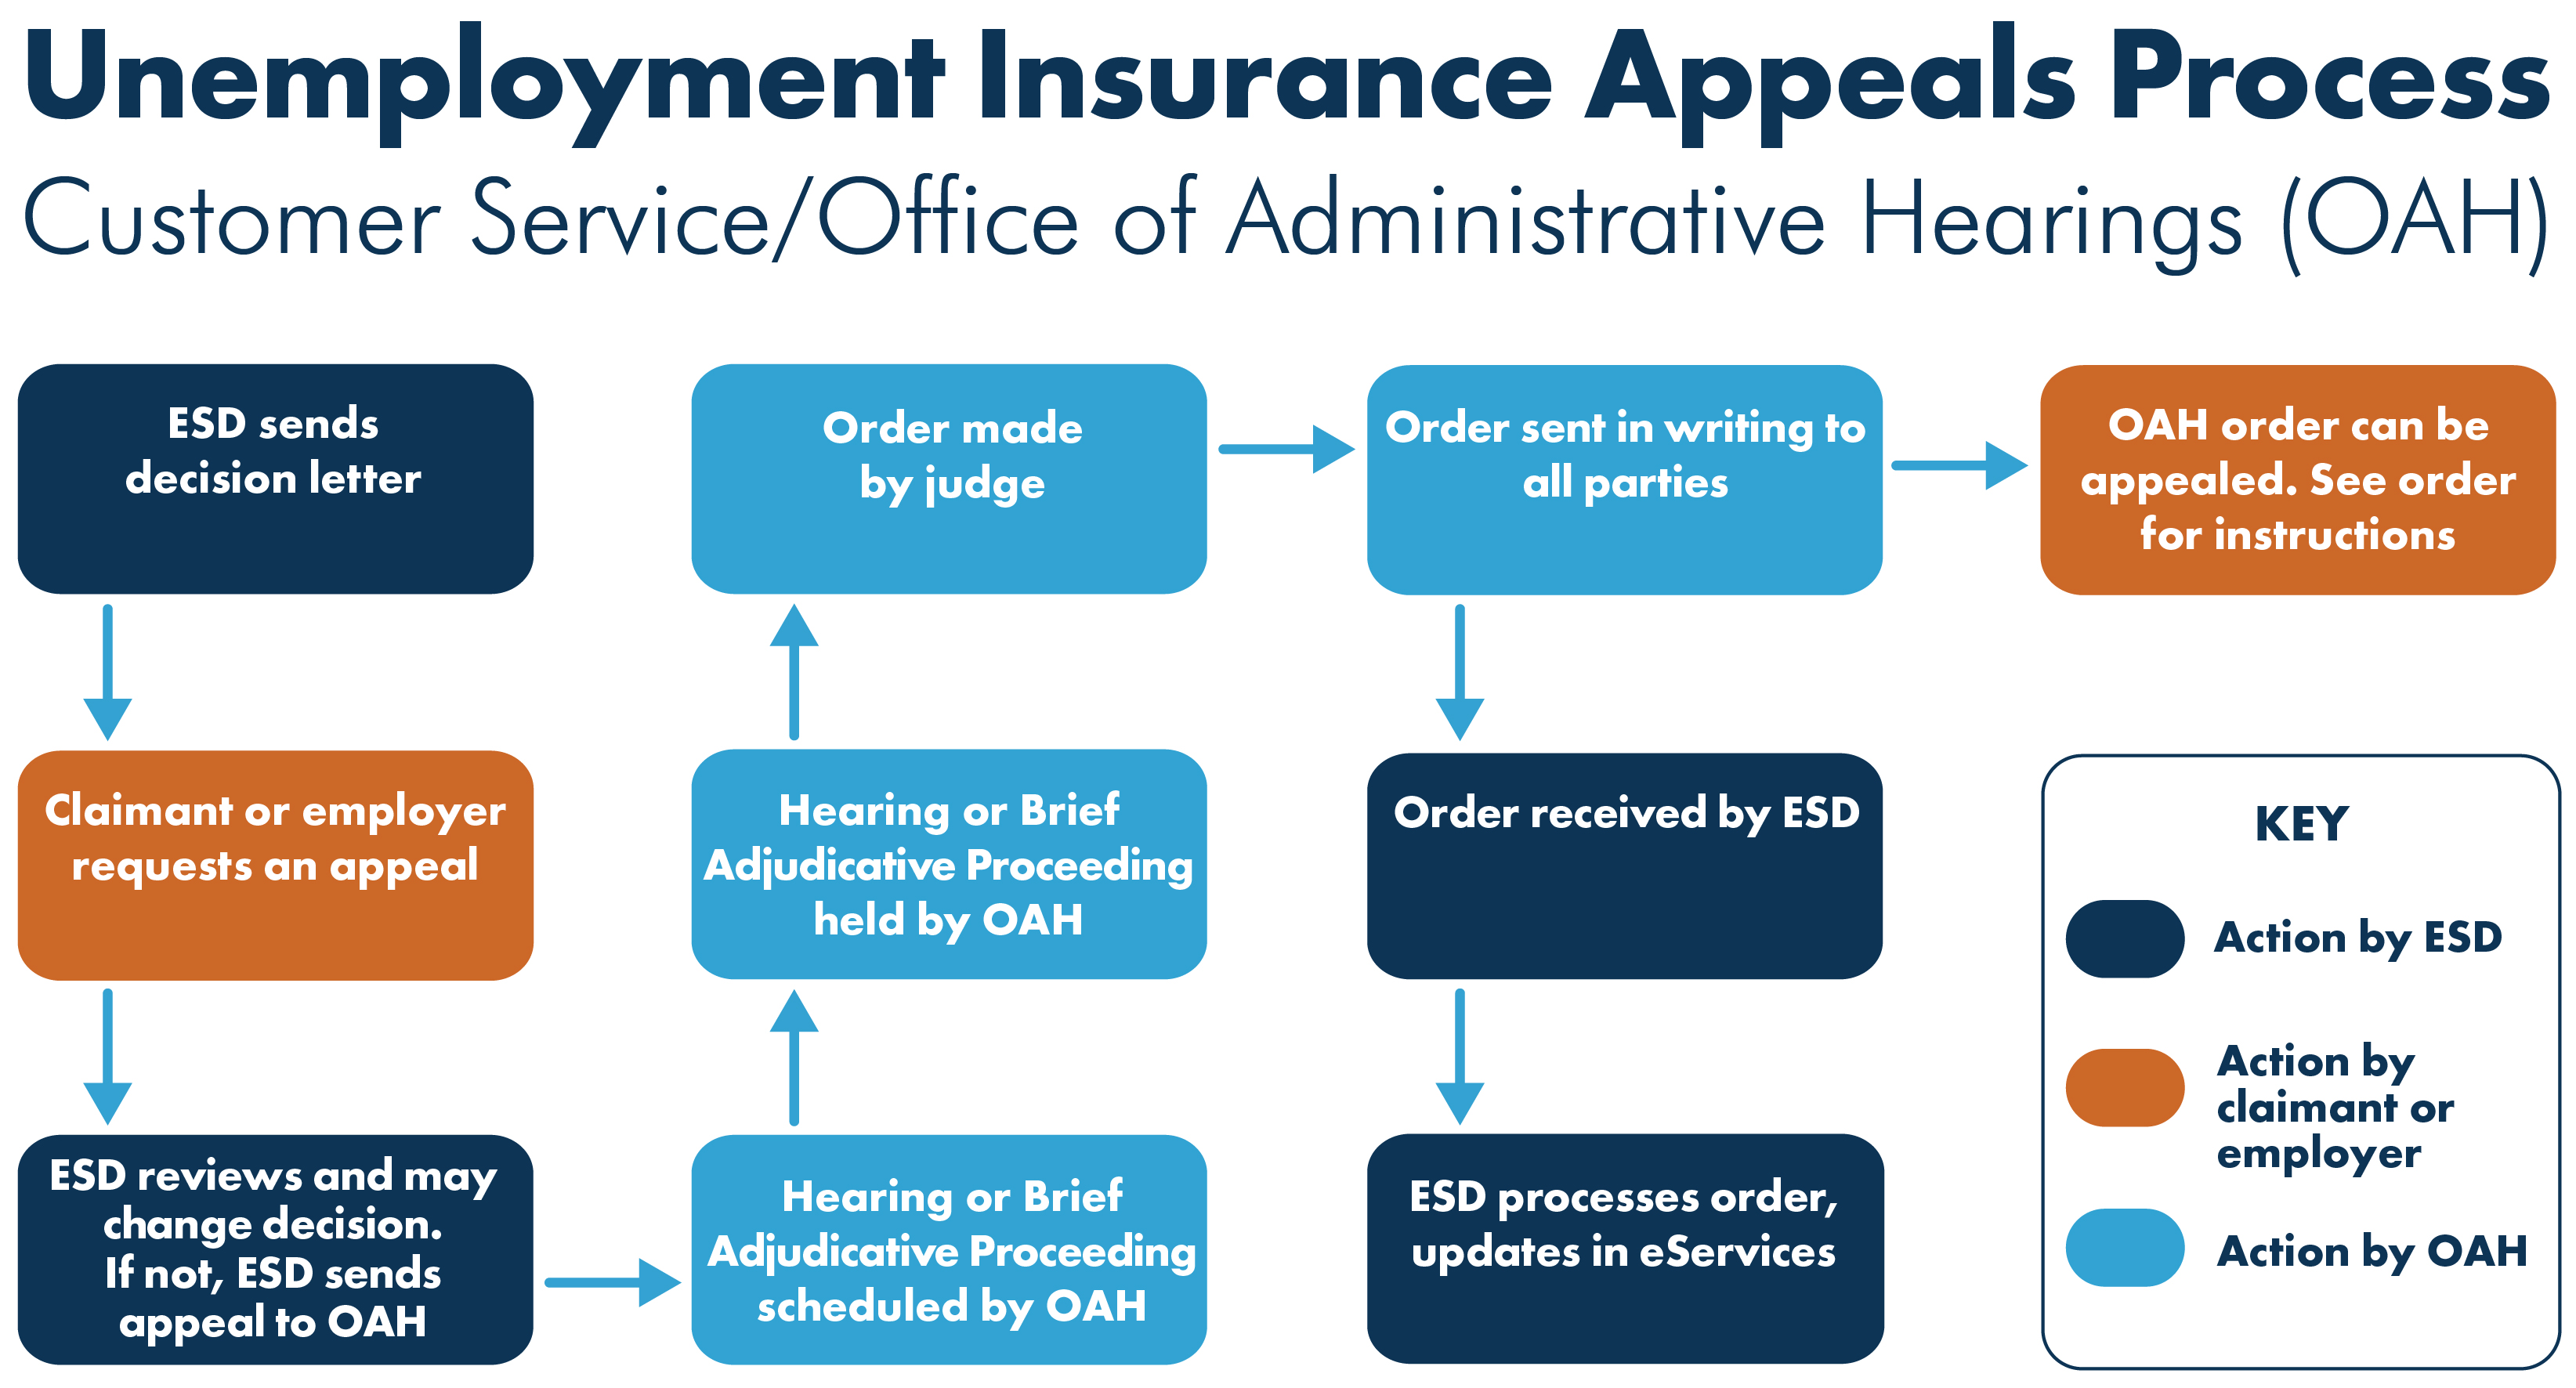 UI Insurance Appeals Process